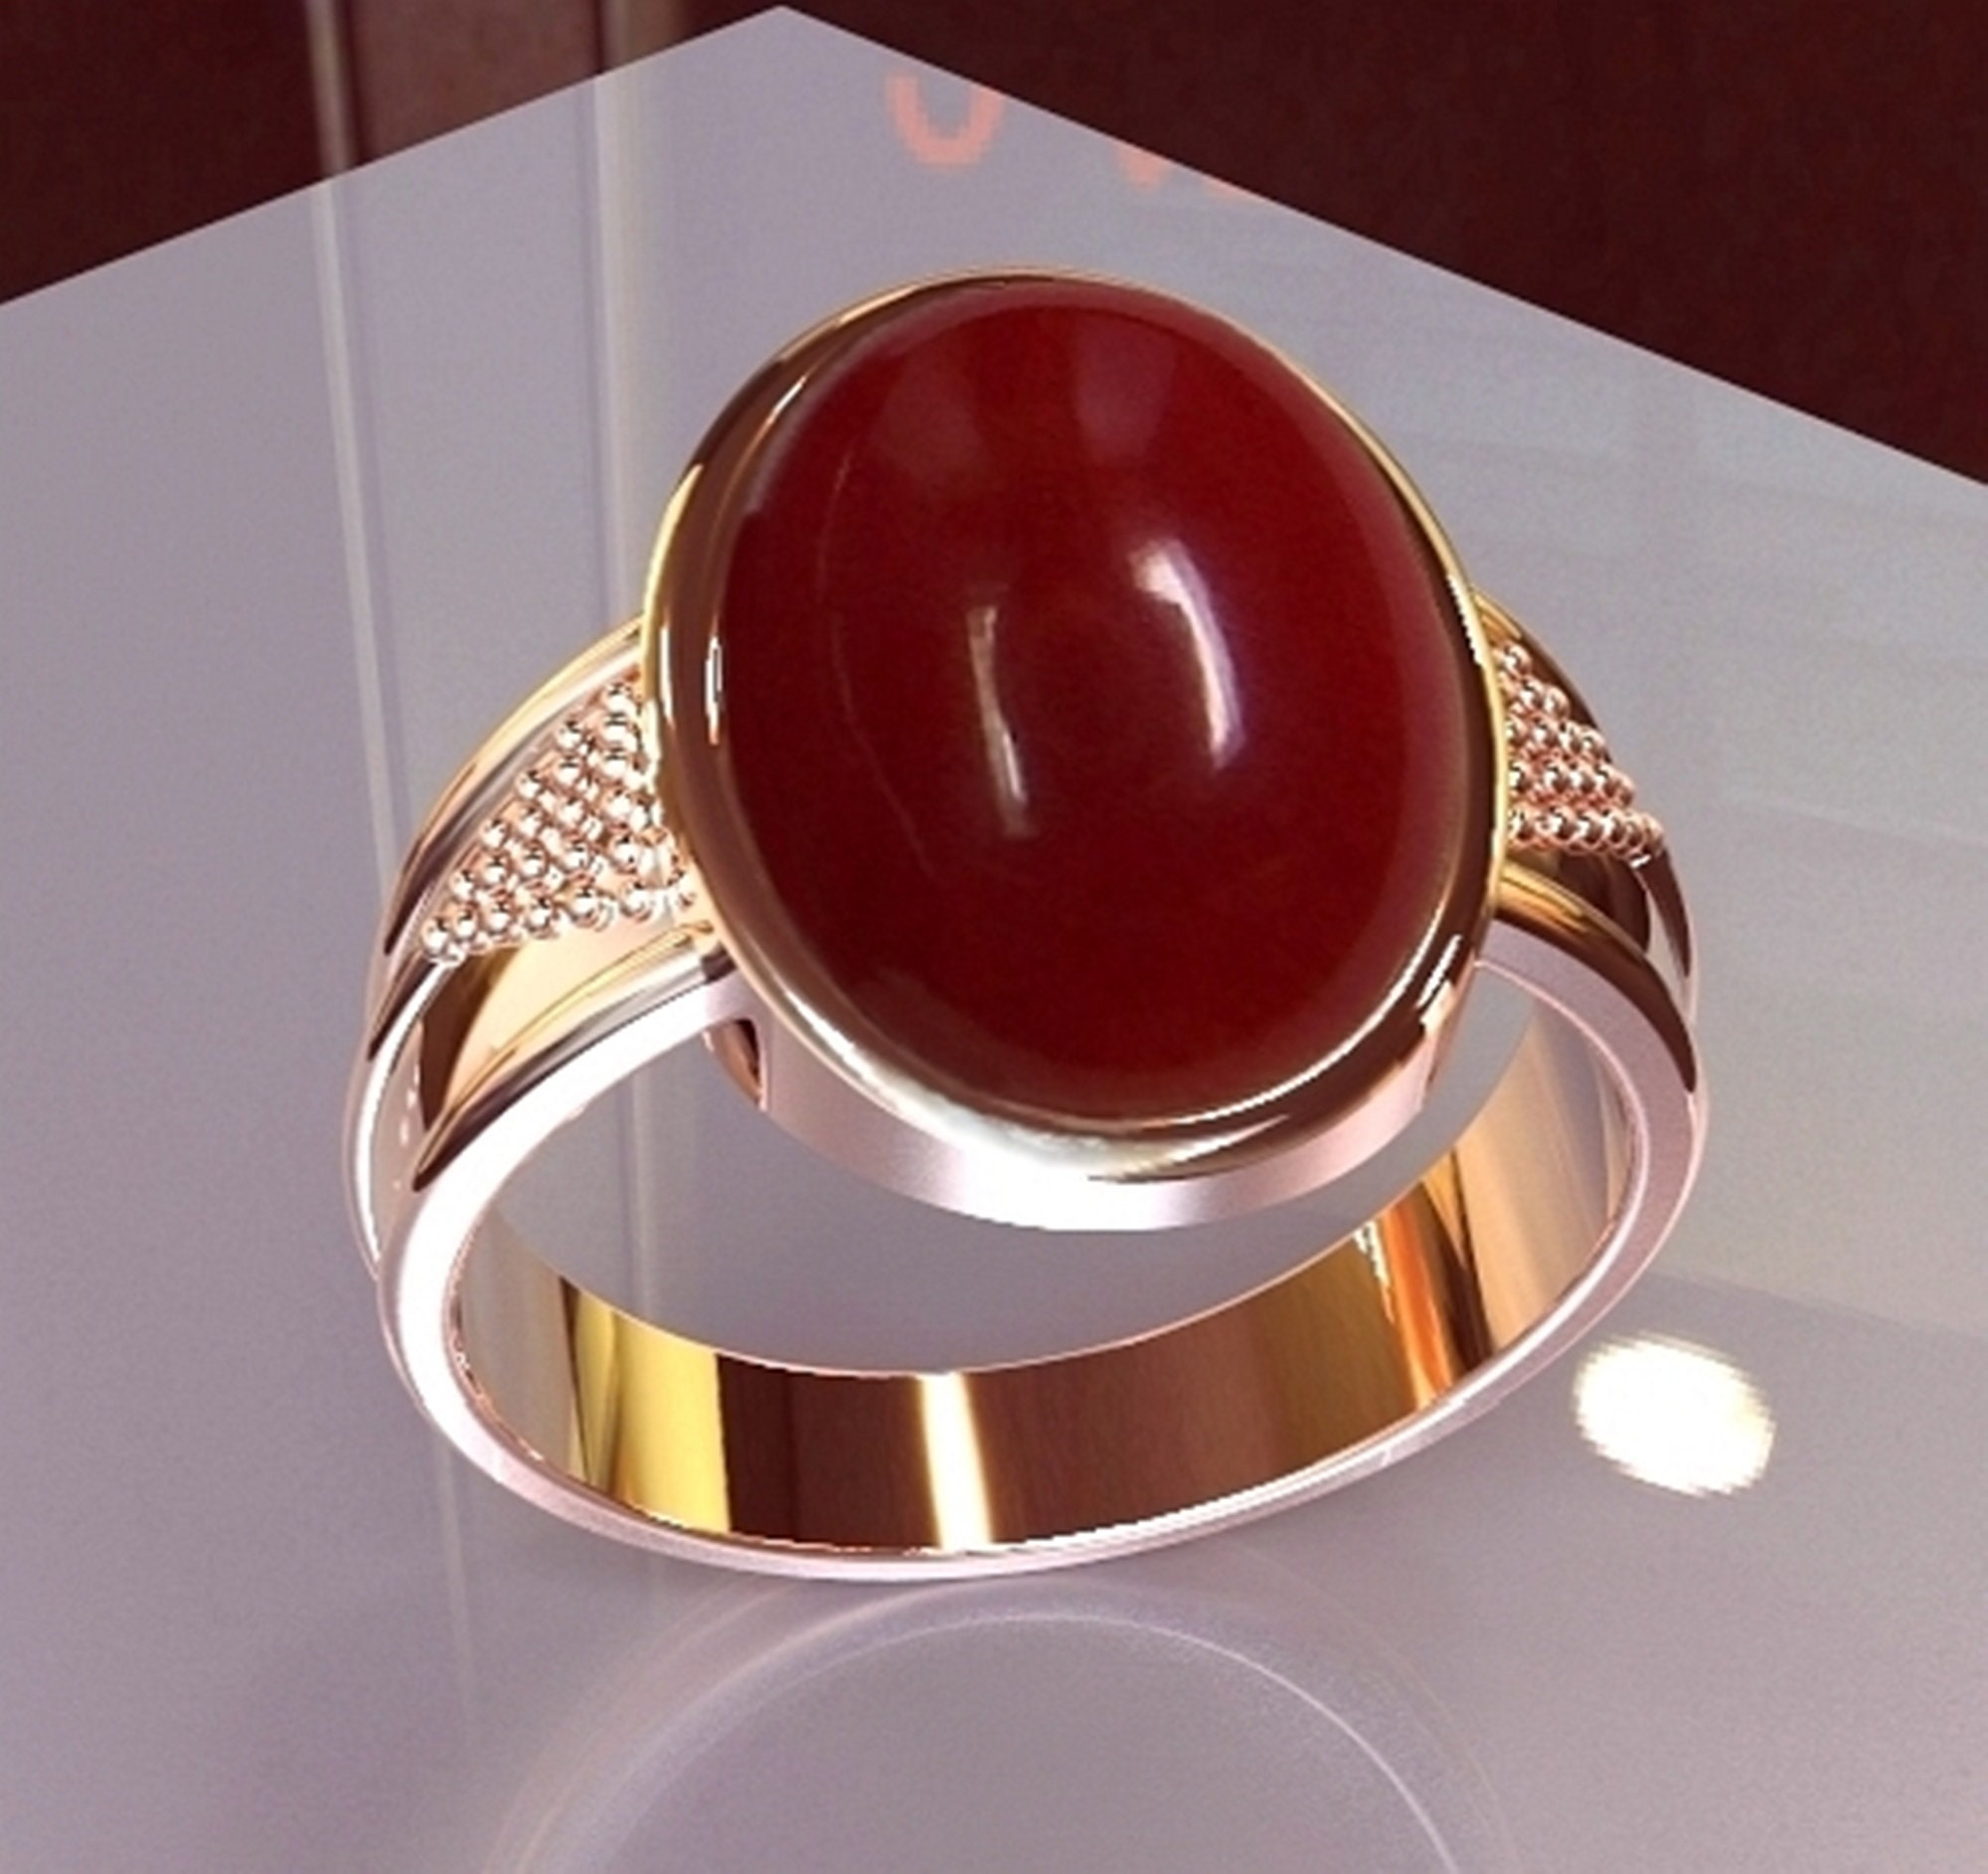 Buy Vintage Natural Red Coral 14K Gold Ring Online in India - Etsy